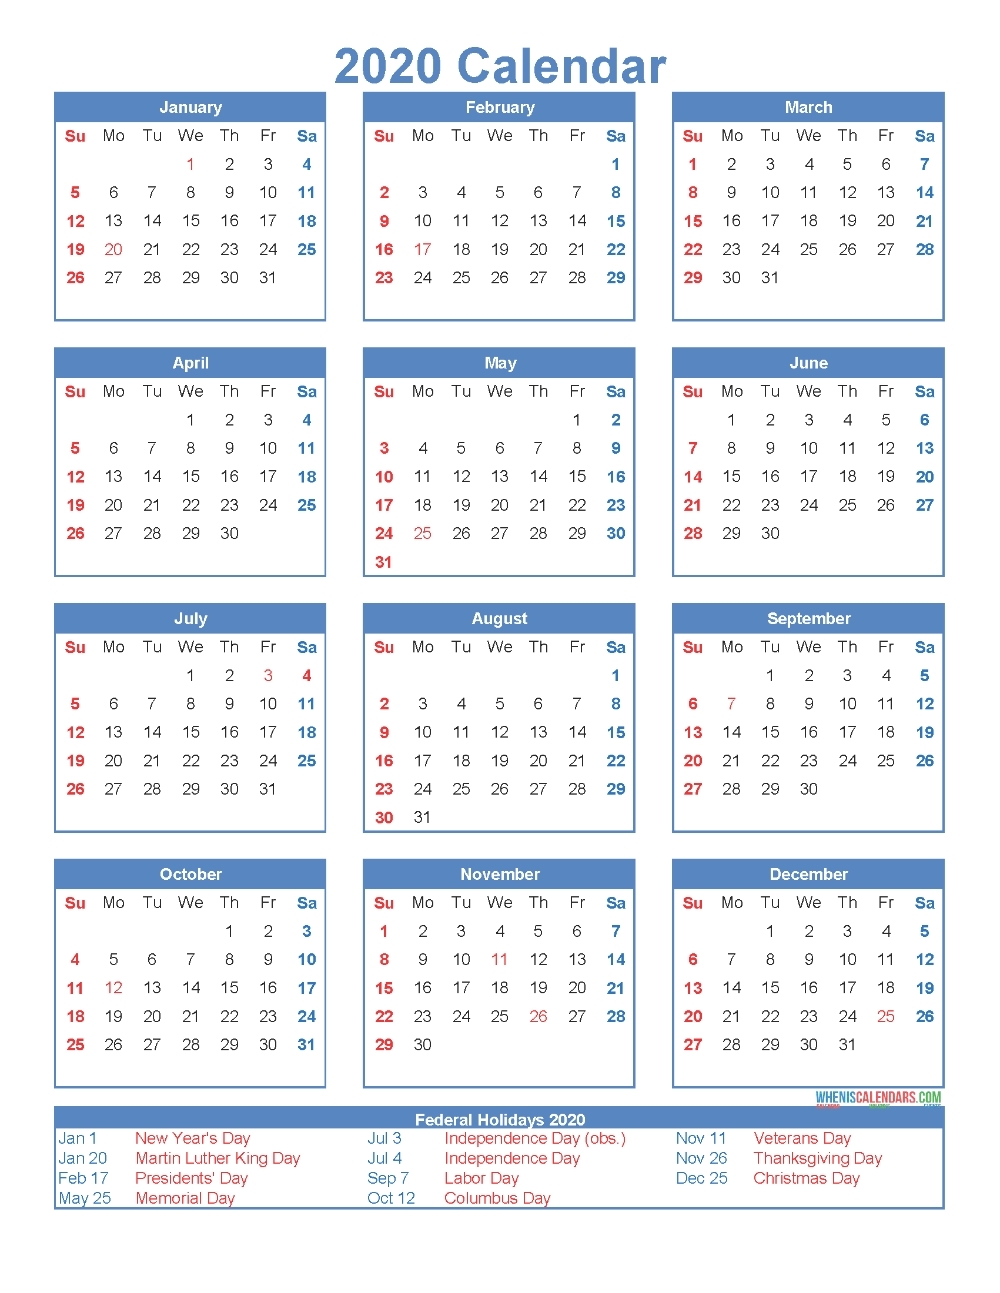 Depo- Provera Calendar – Template Calendar Design-Depo Provera Calendar 2021